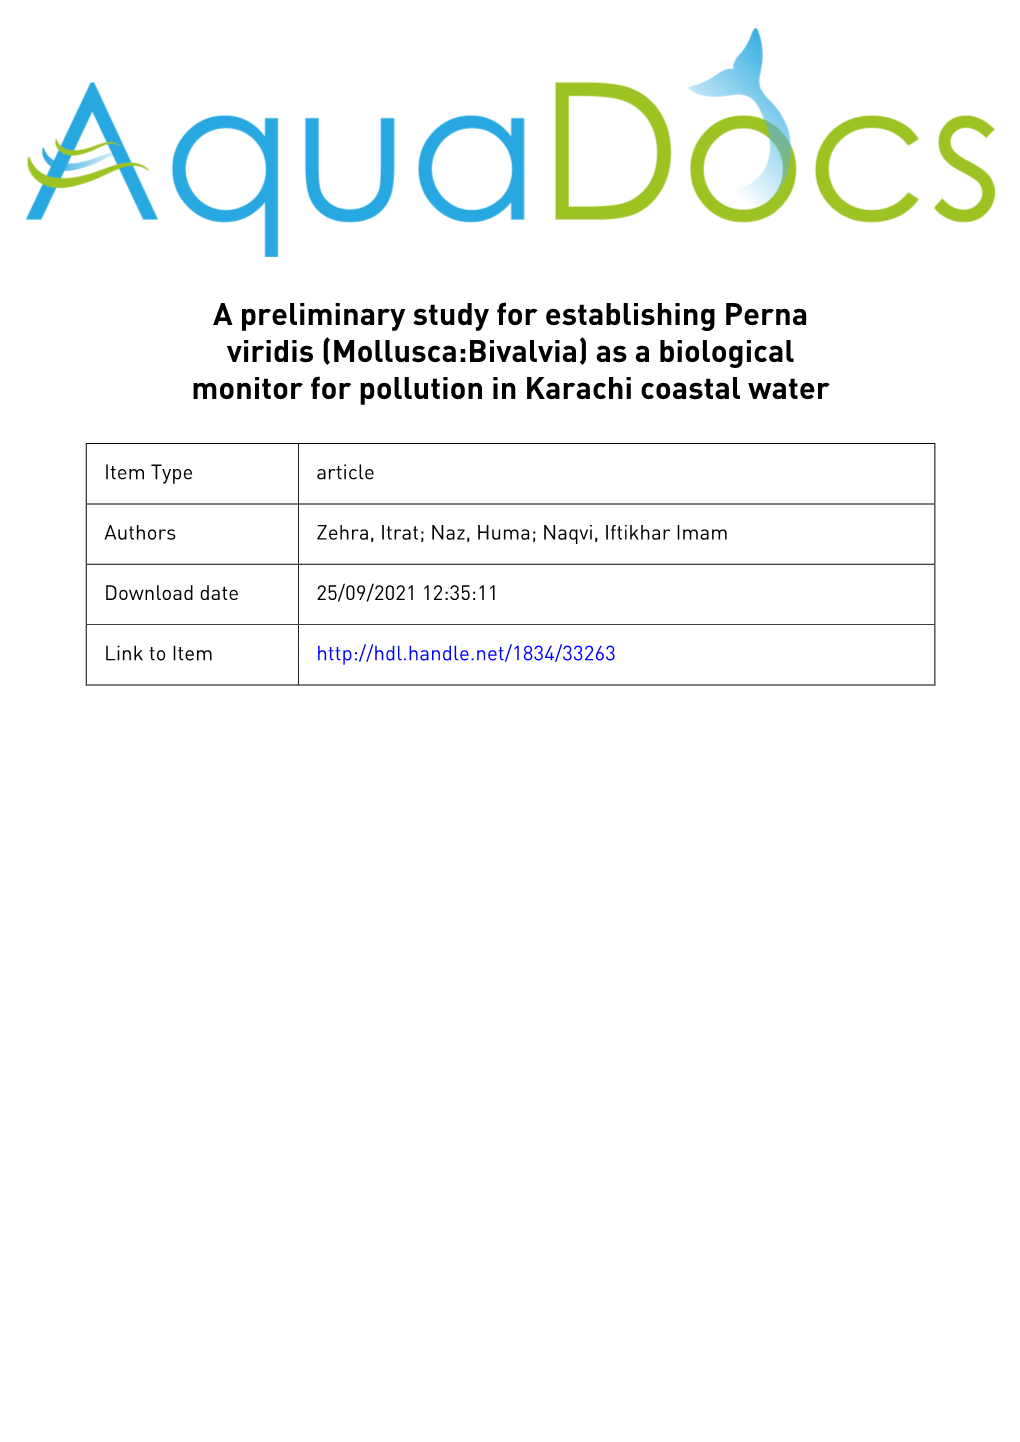 A Preliminary Study for Establishing Perna Viridis (Mollusca: Bivalvia) As a Biological Monitor for Pollution in Karachi Coastal Water